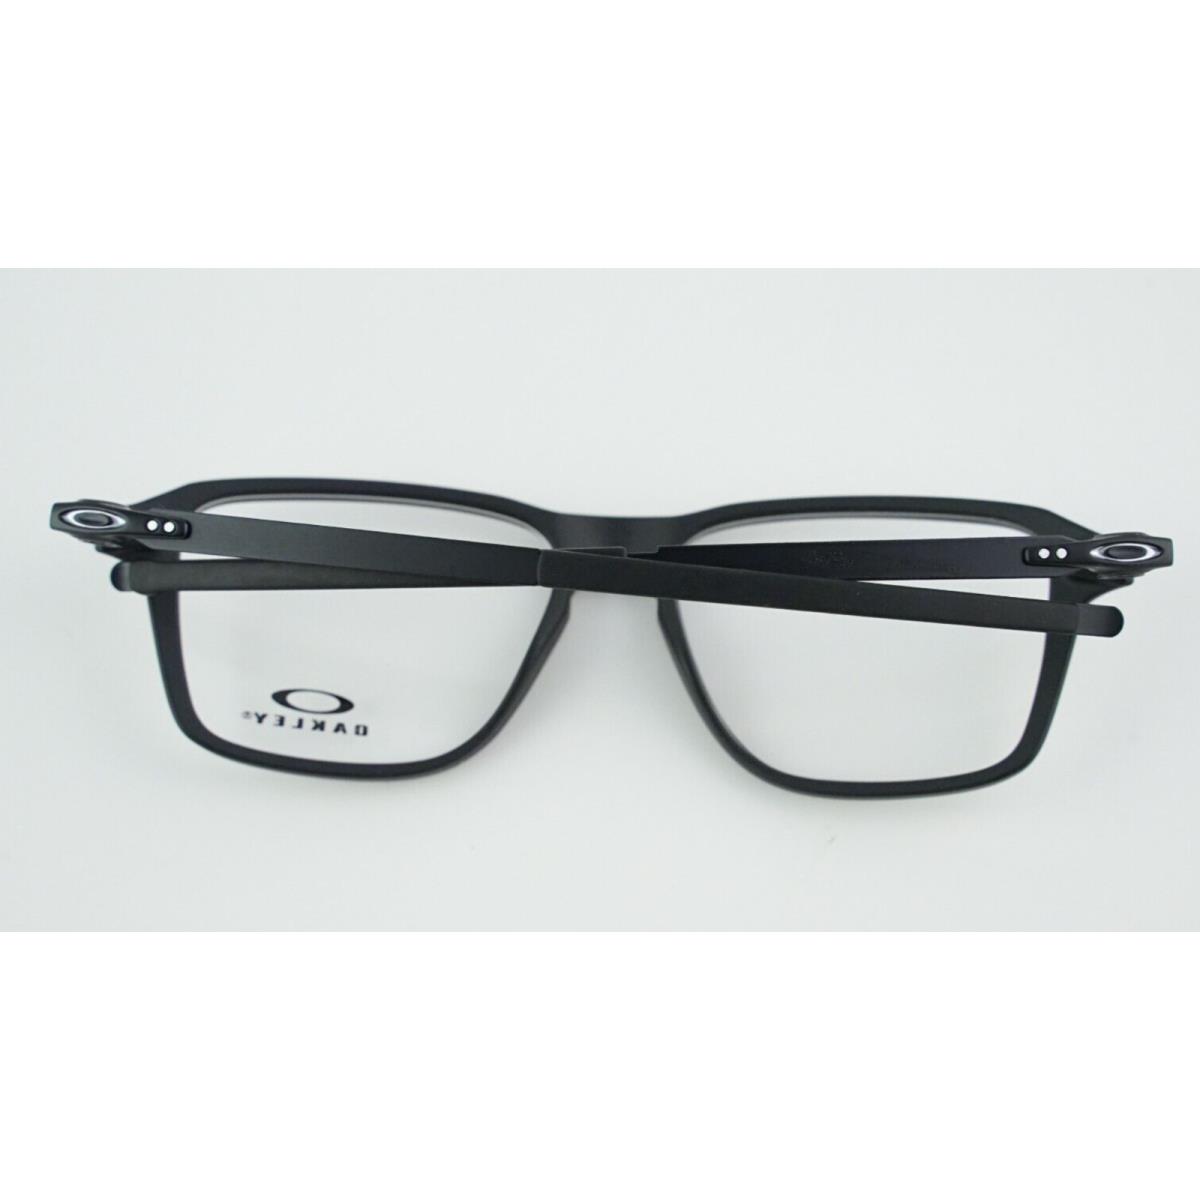 Oakley eyeglasses Wheel House - Matte Black w/ Black & Silver Temples Frame, Demos with imprint Lens 1